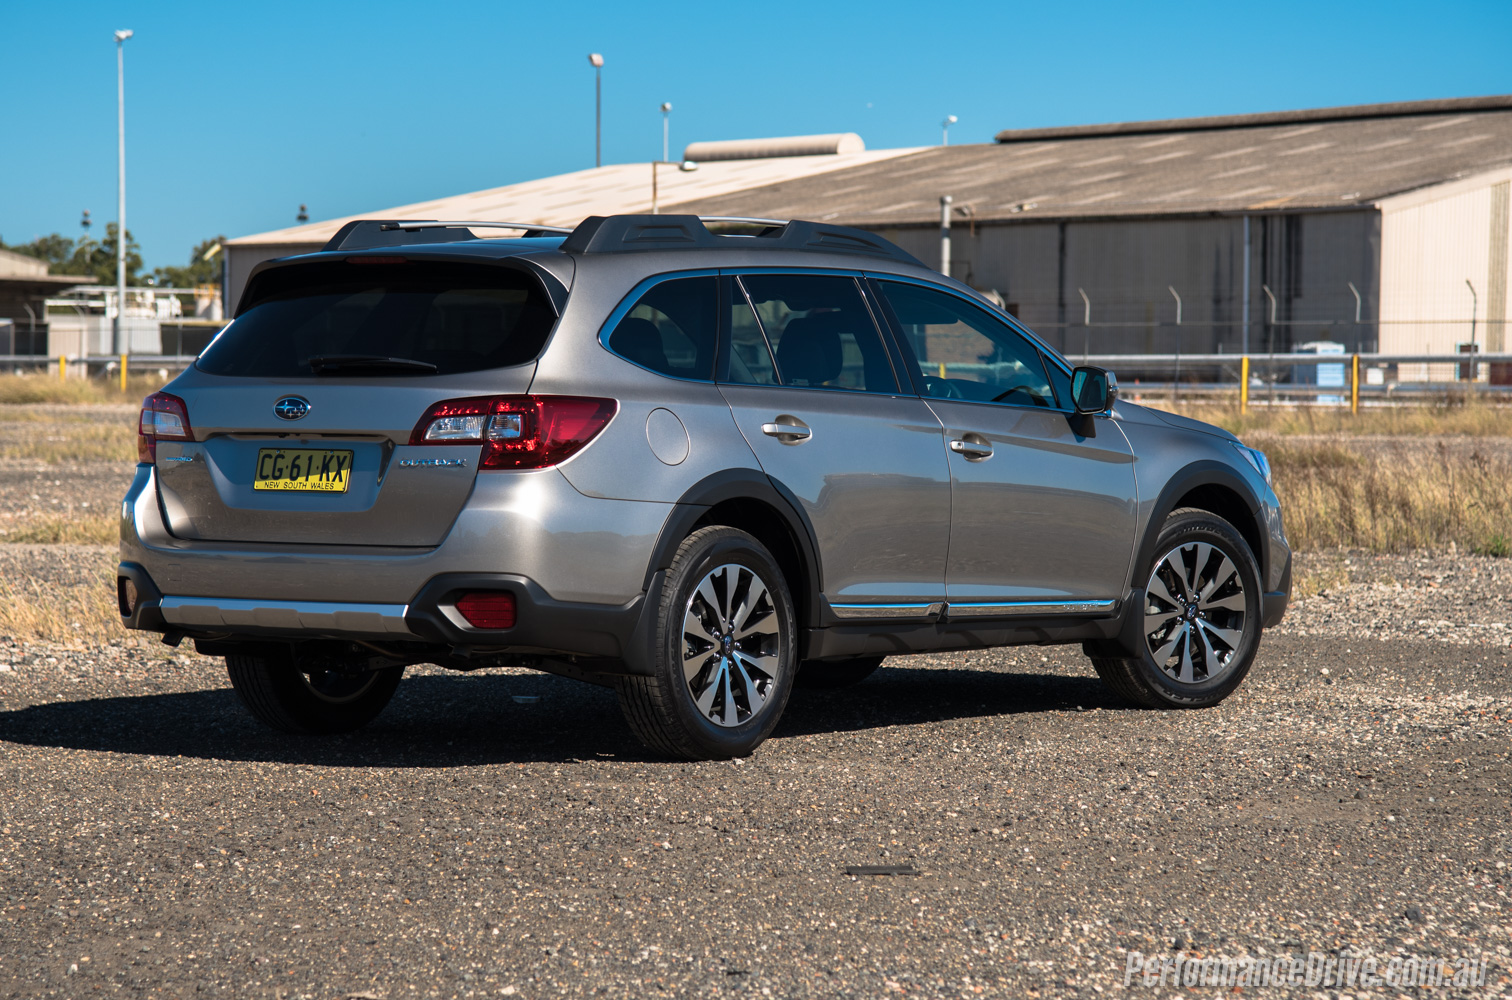 2016 Subaru Outback 3.6R review (video) PerformanceDrive